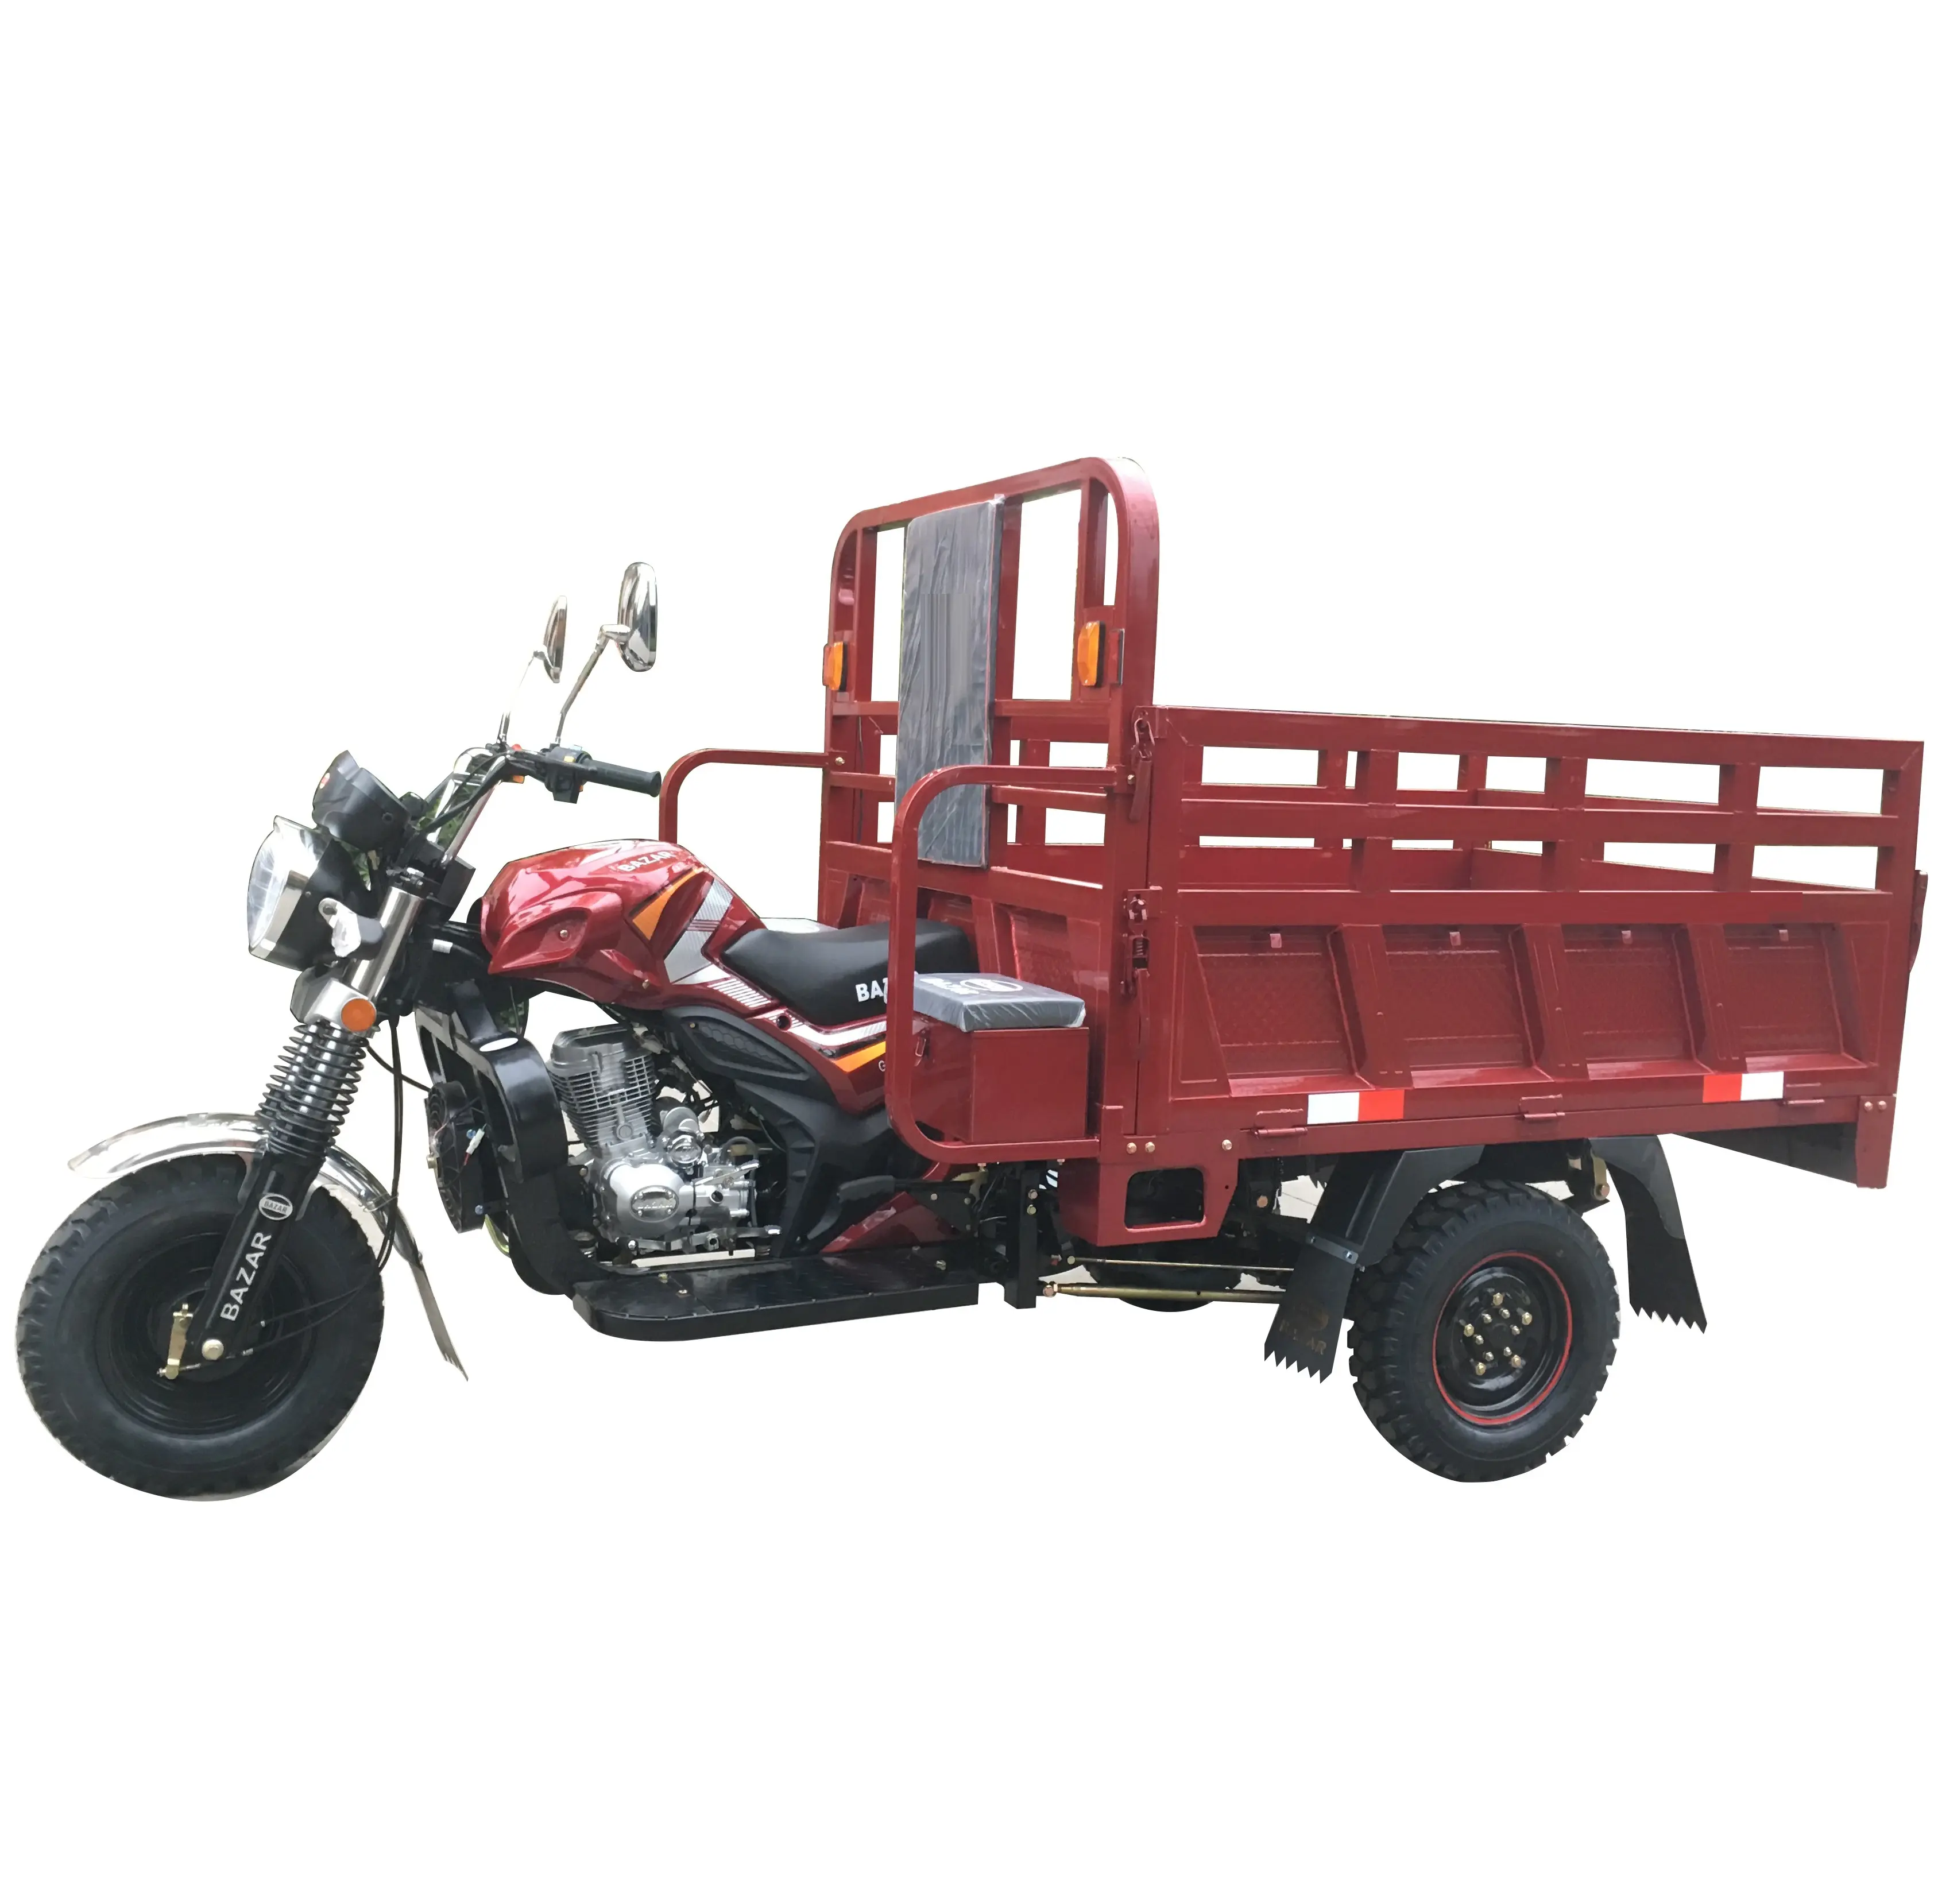 Alta Qualidade top Configrations motorizado triciclo carga modelo MOTO-R2